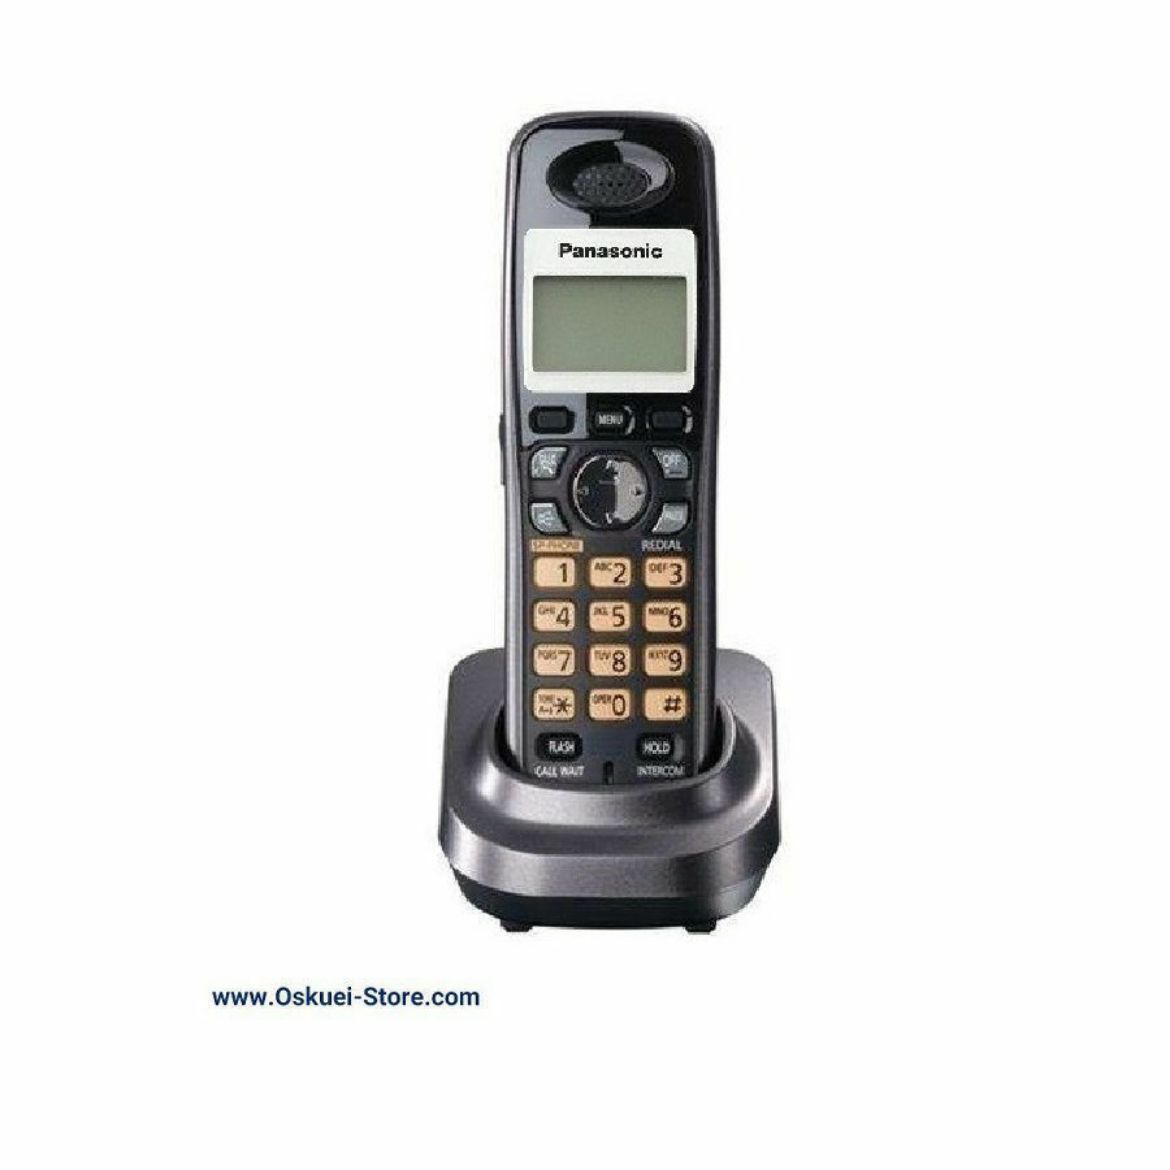 Panasonic KX-TGA931 Cordless Telephone Black WIth Base